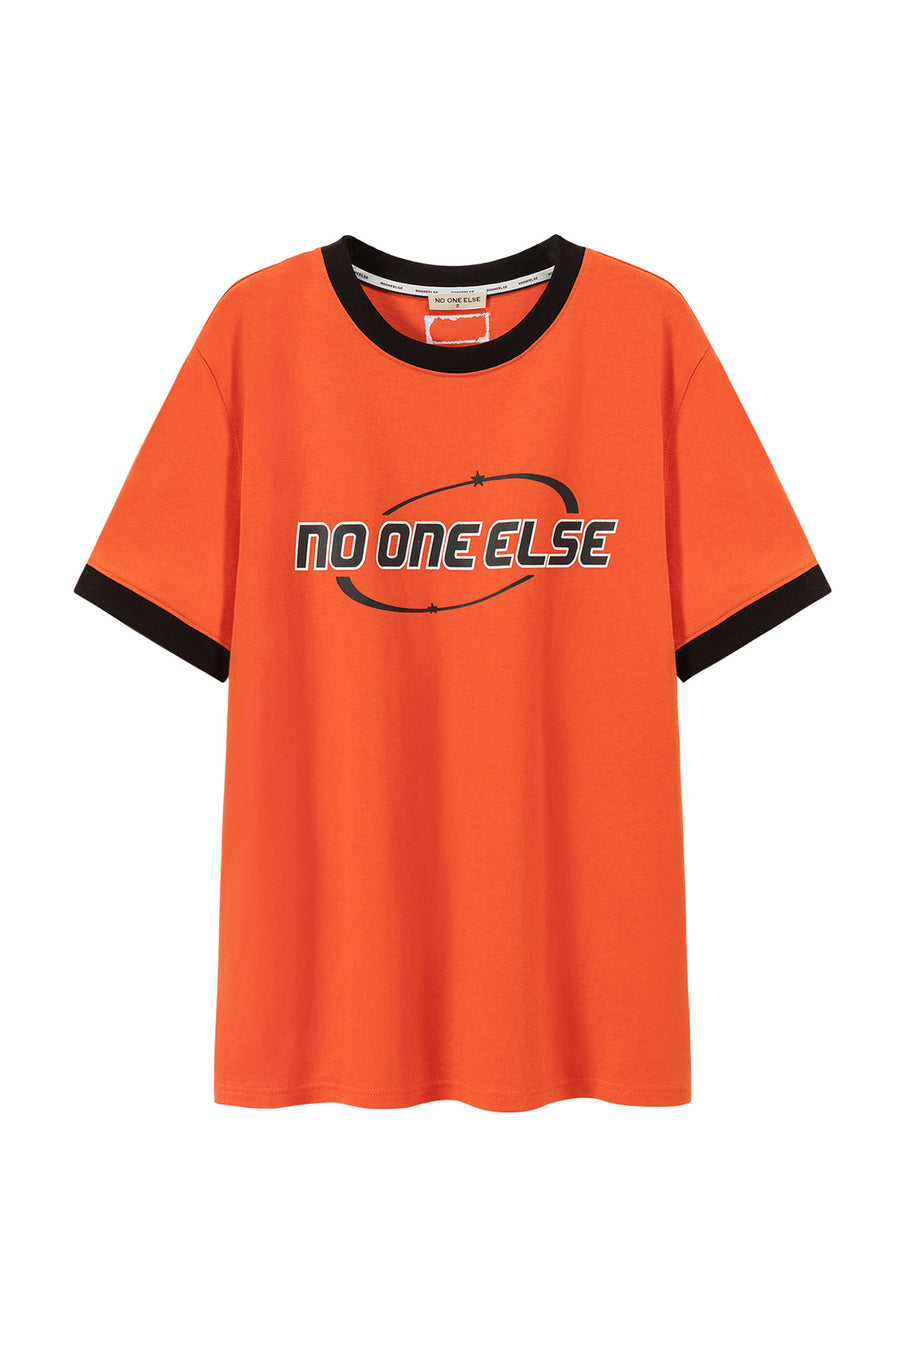 CHUU Noe Center Logo Color Loose Fit T-Shirt